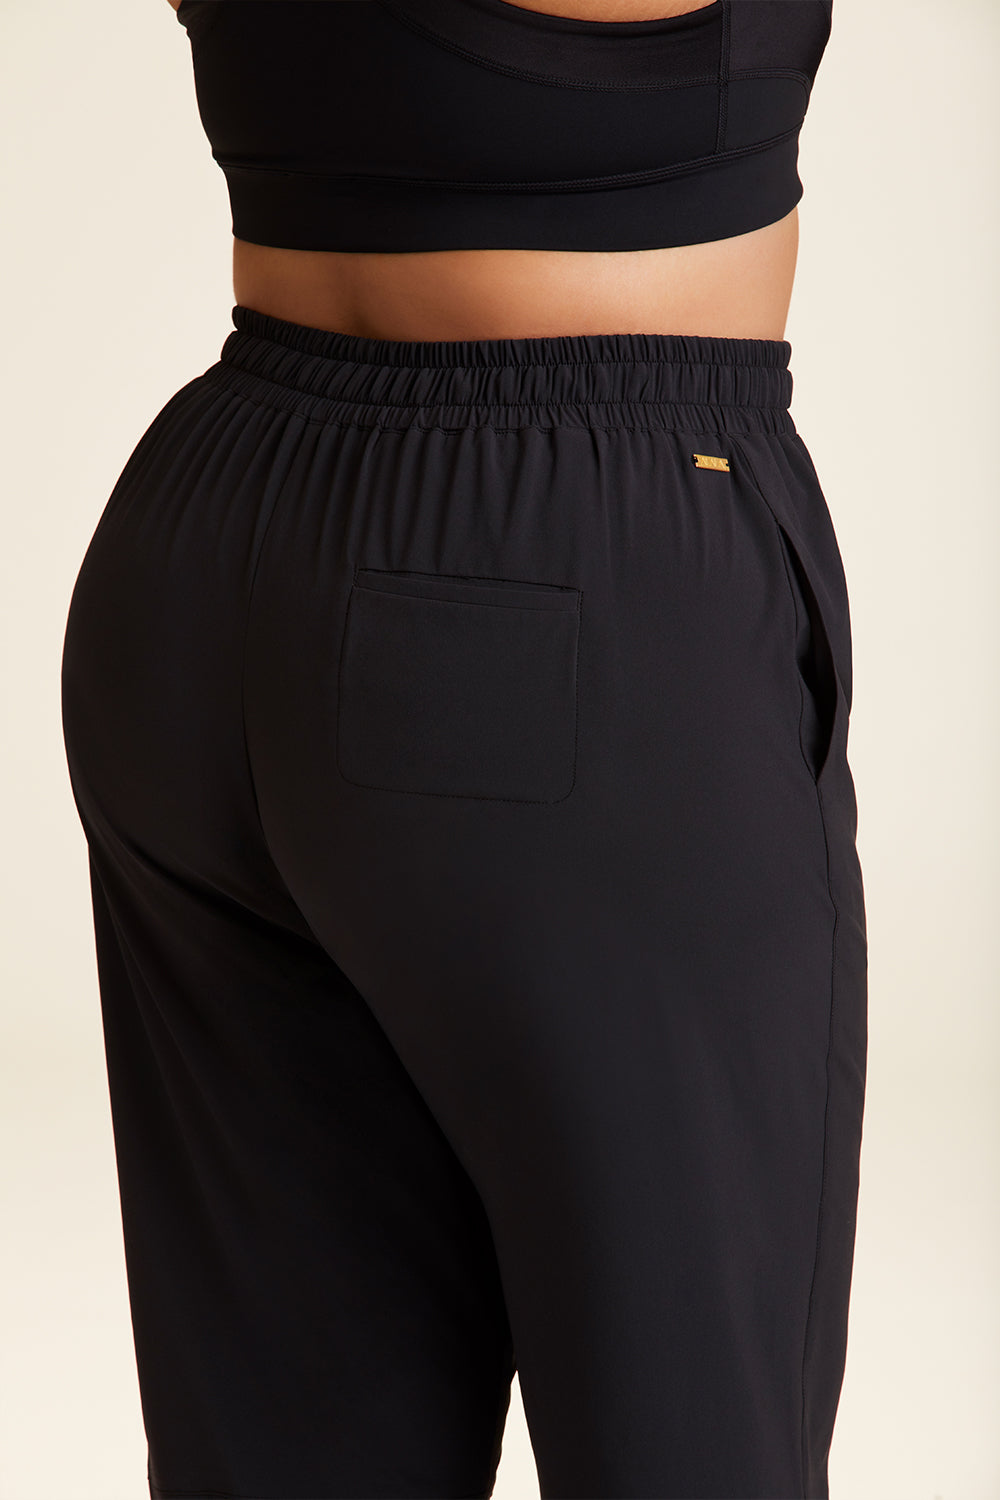 Shop Plus Size Natural Lulu Crop Pant in Black